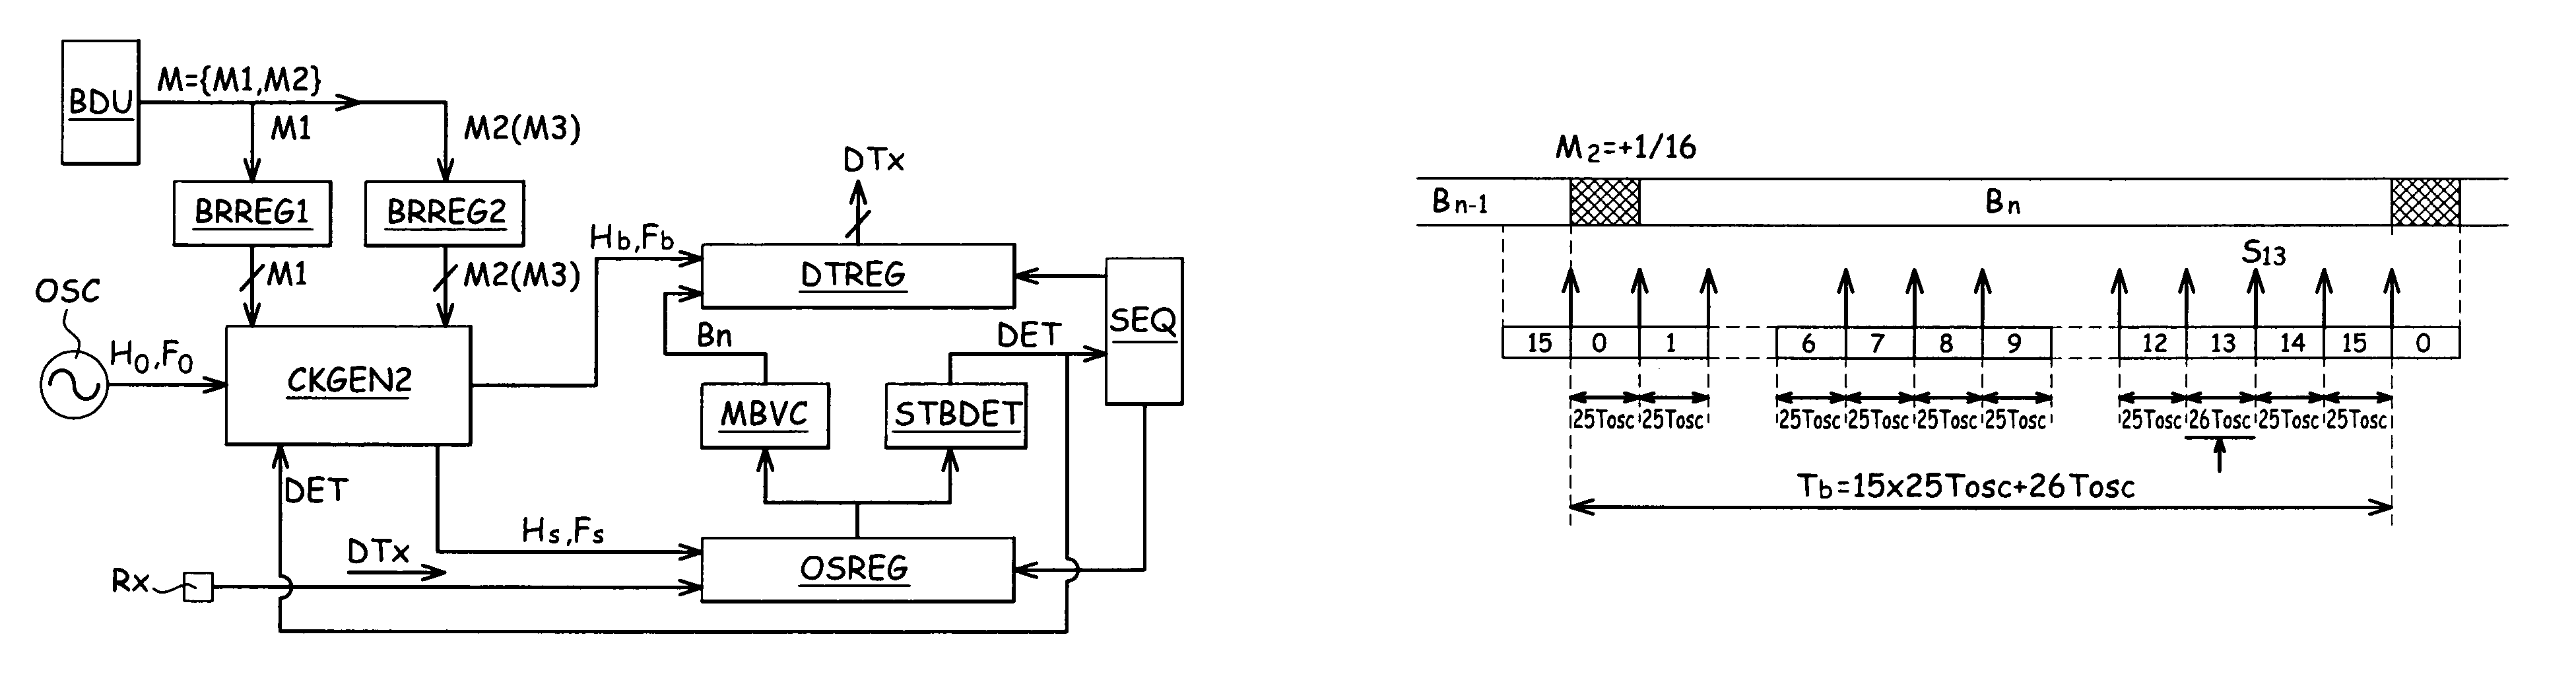 Decimal set point clock generator and application of this clock generator to UART circuit